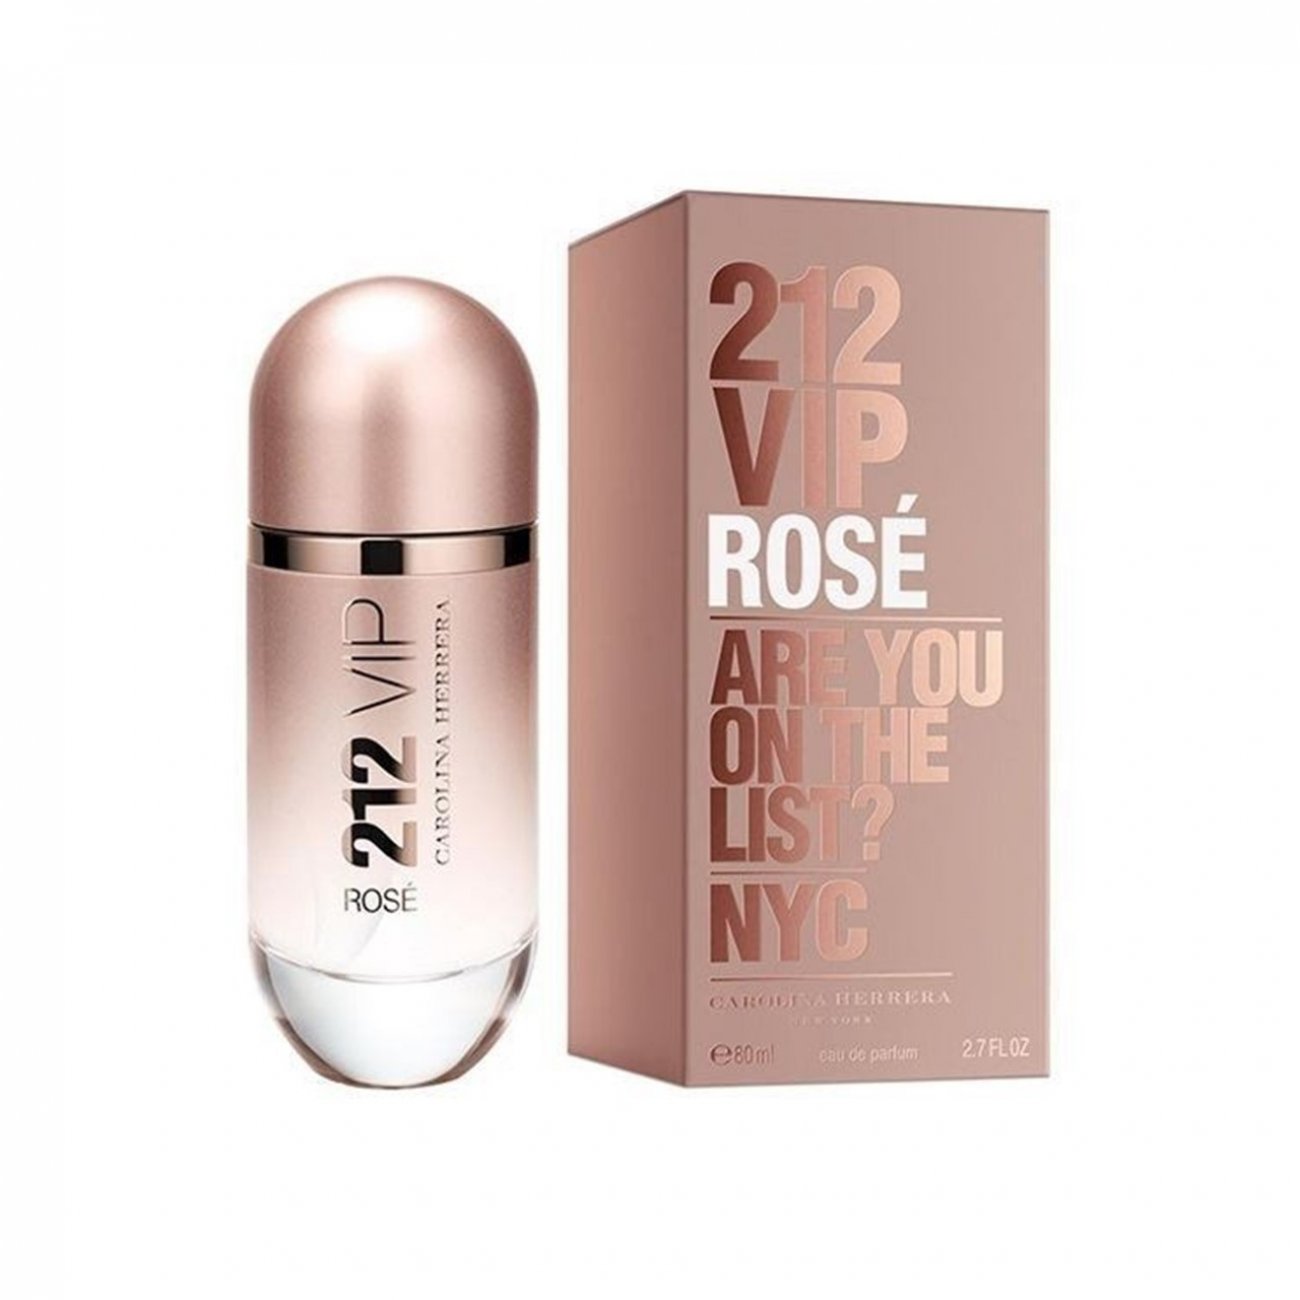 Tyggegummi Med venlig hilsen For en dagstur Buy Carolina Herrera 212 VIP Rosé Eau de Parfum · USA